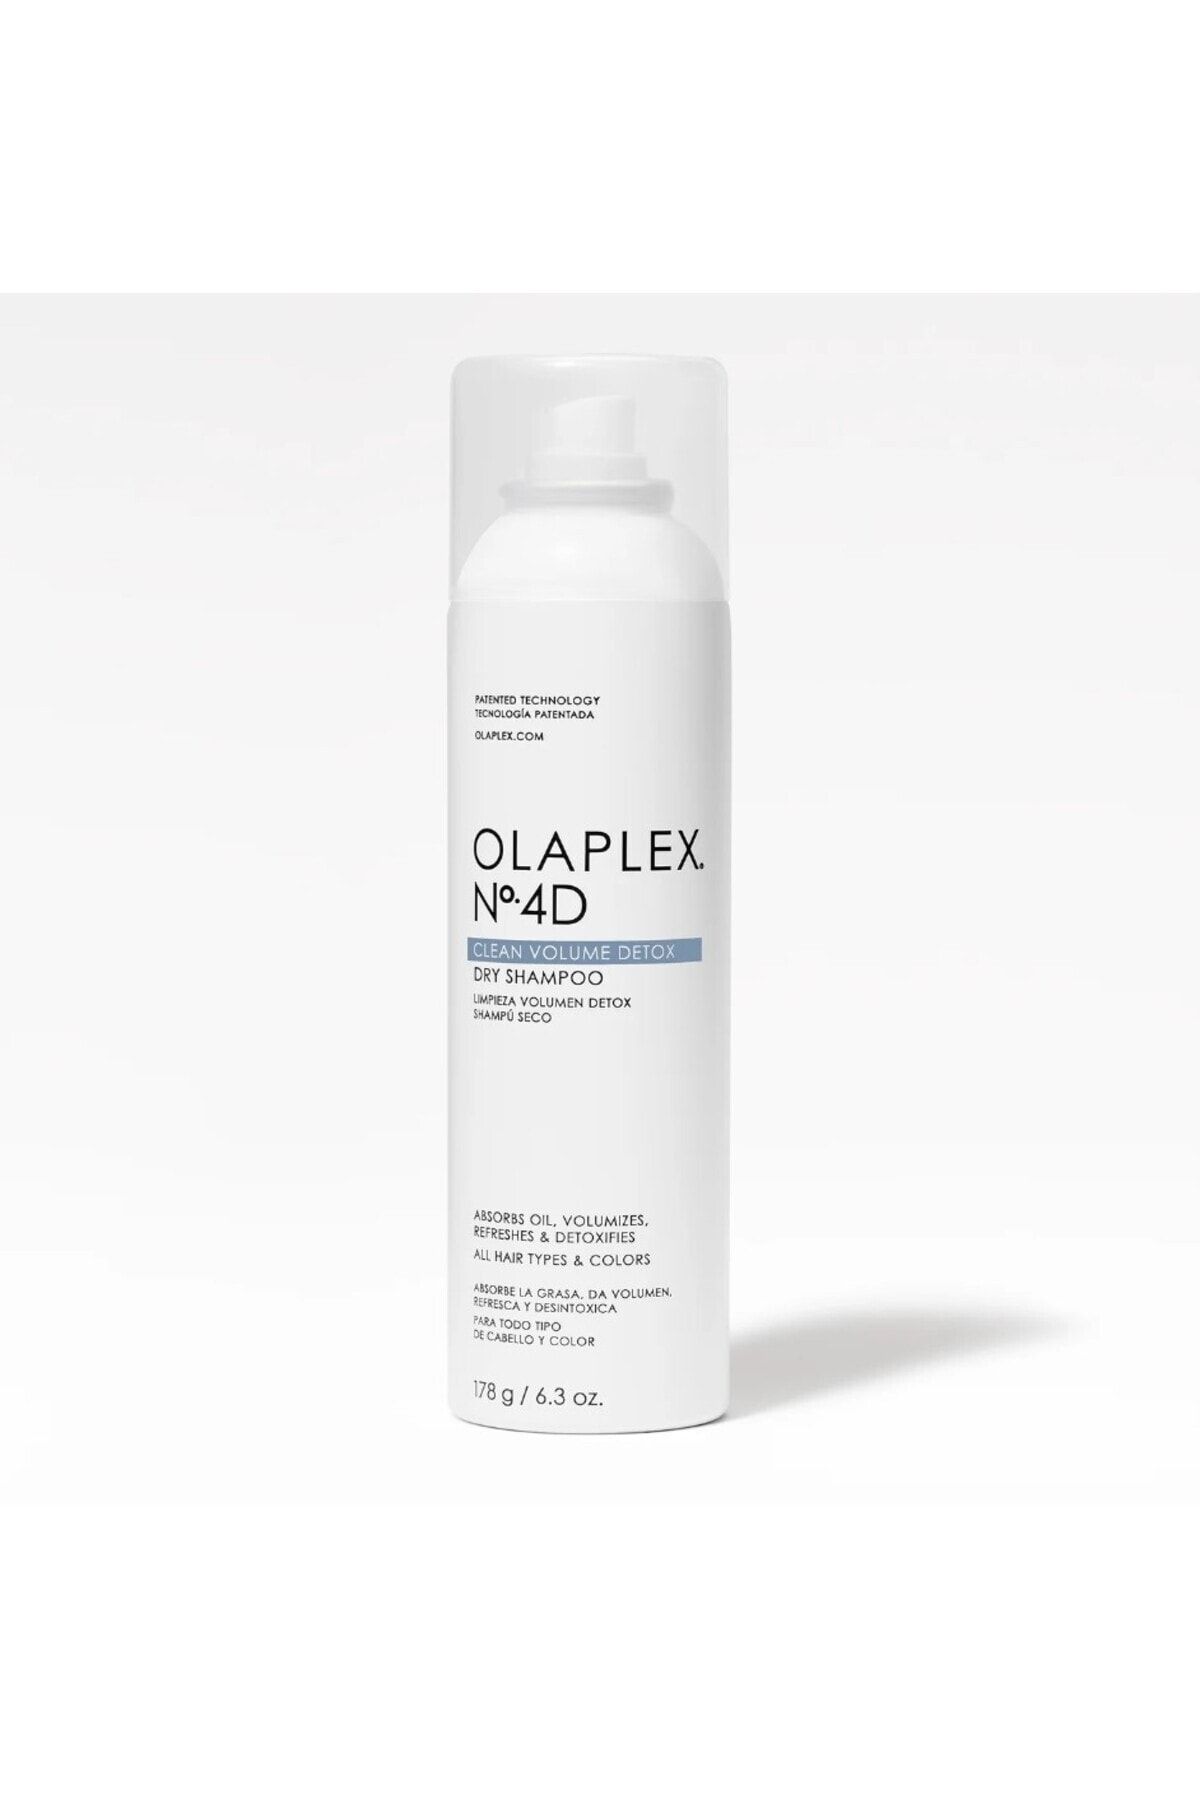 Olaplex شامپو خشک تصفیه‌کننده حجم دهنده مو OLAPLEX N ° .4D 178g